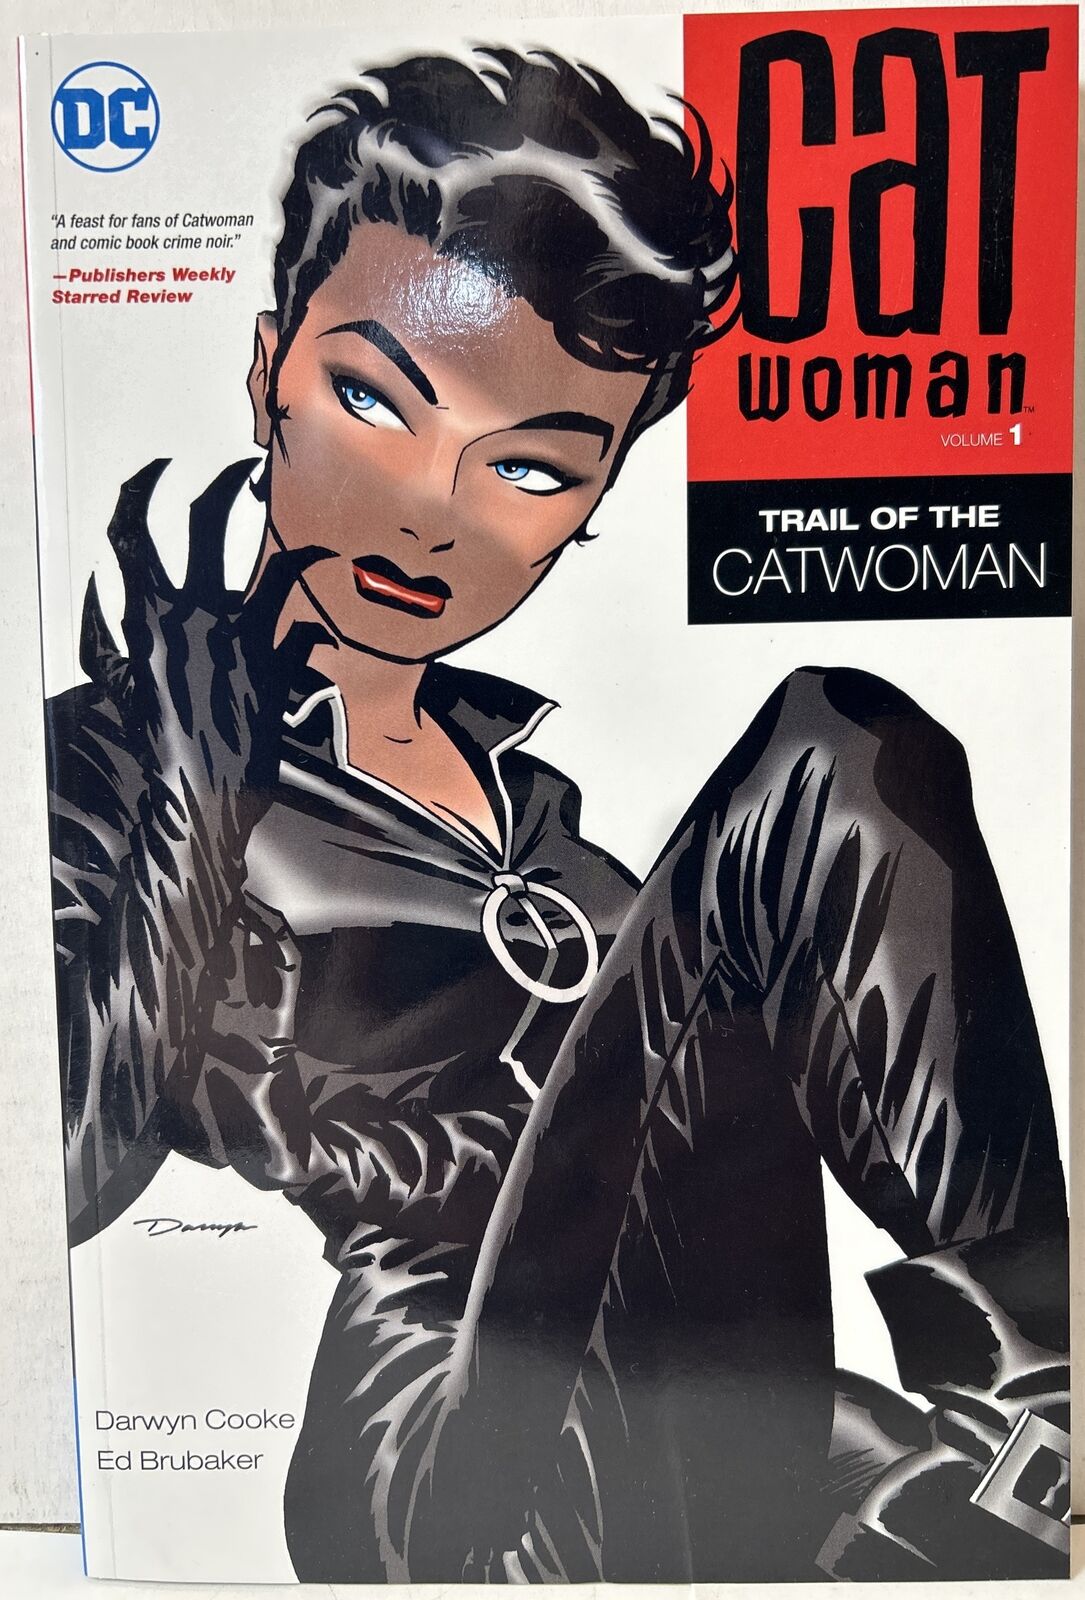 Catwoman #1 (DC Comics, March 2012) New Trade Paper